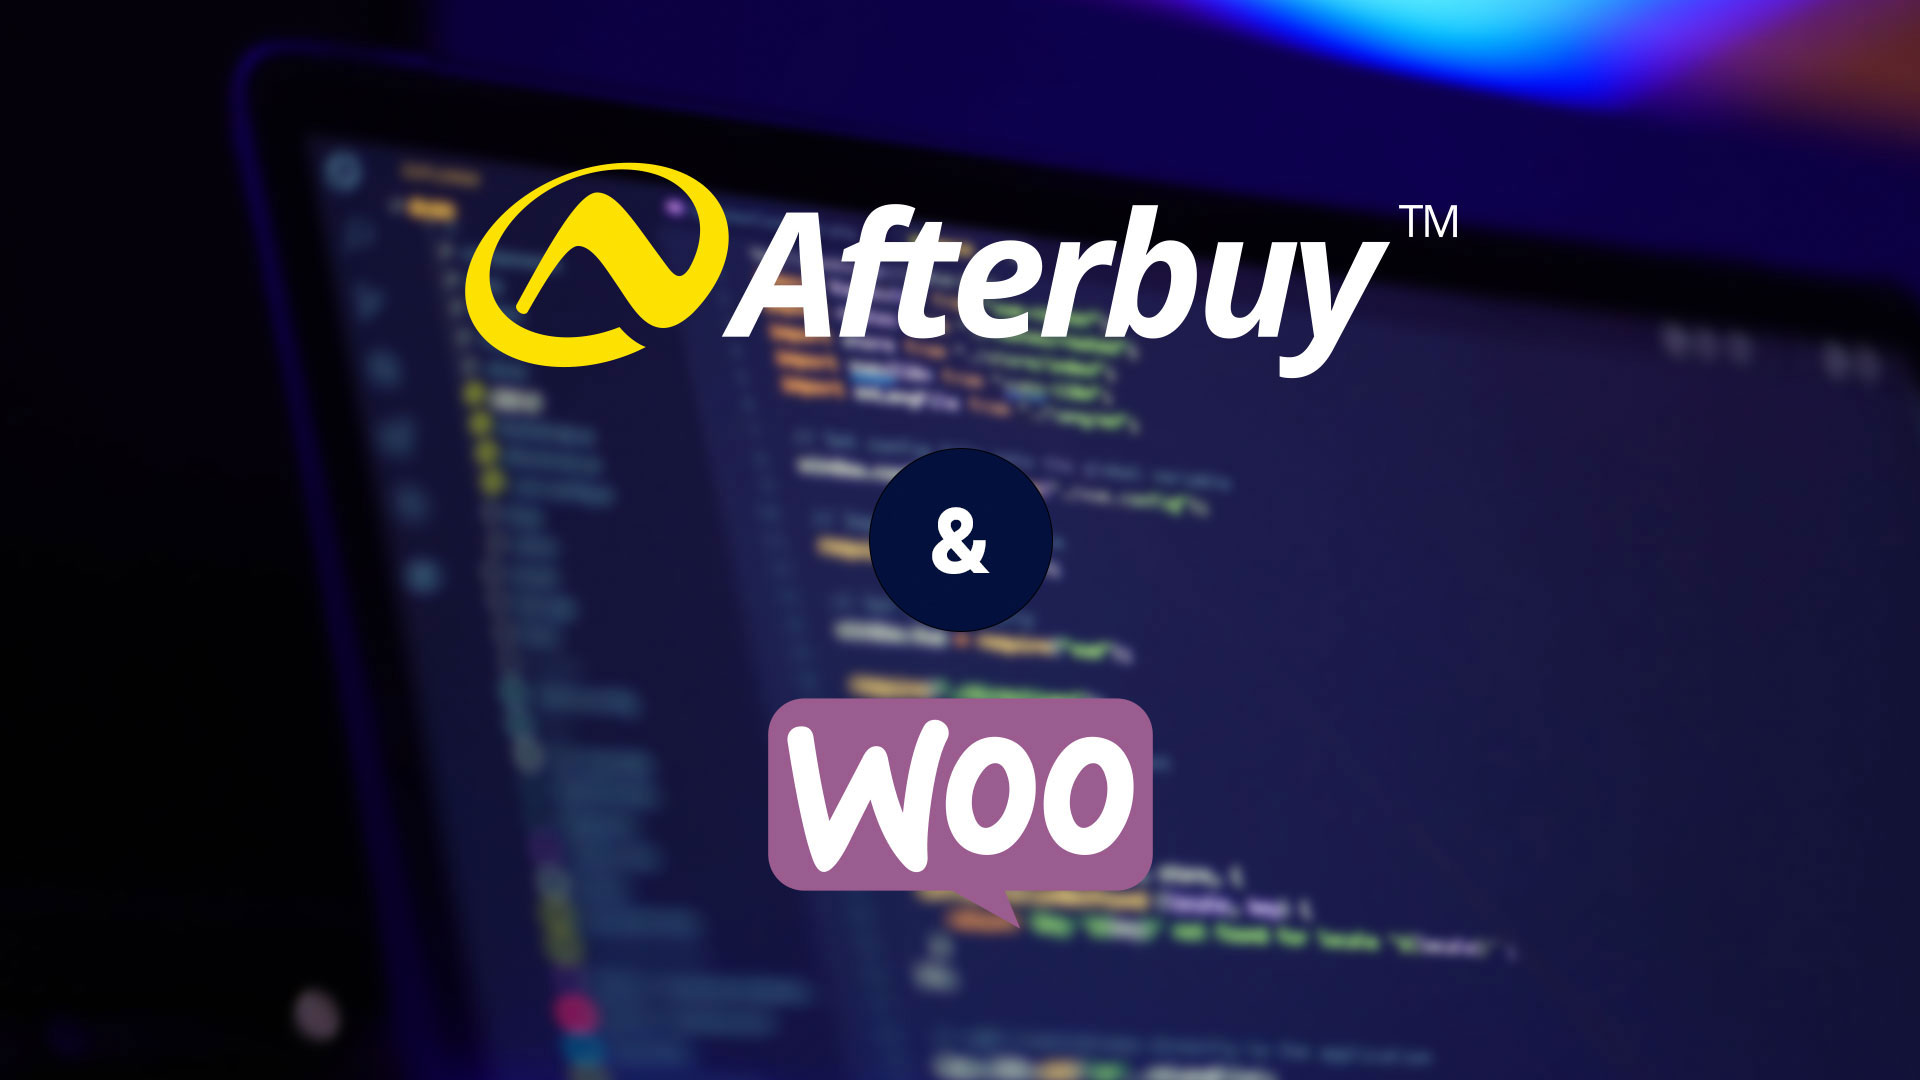 Afterbuy & WooCommerce als Kombination für den Onlinehandel im Blog der J&J Ideenschmiede